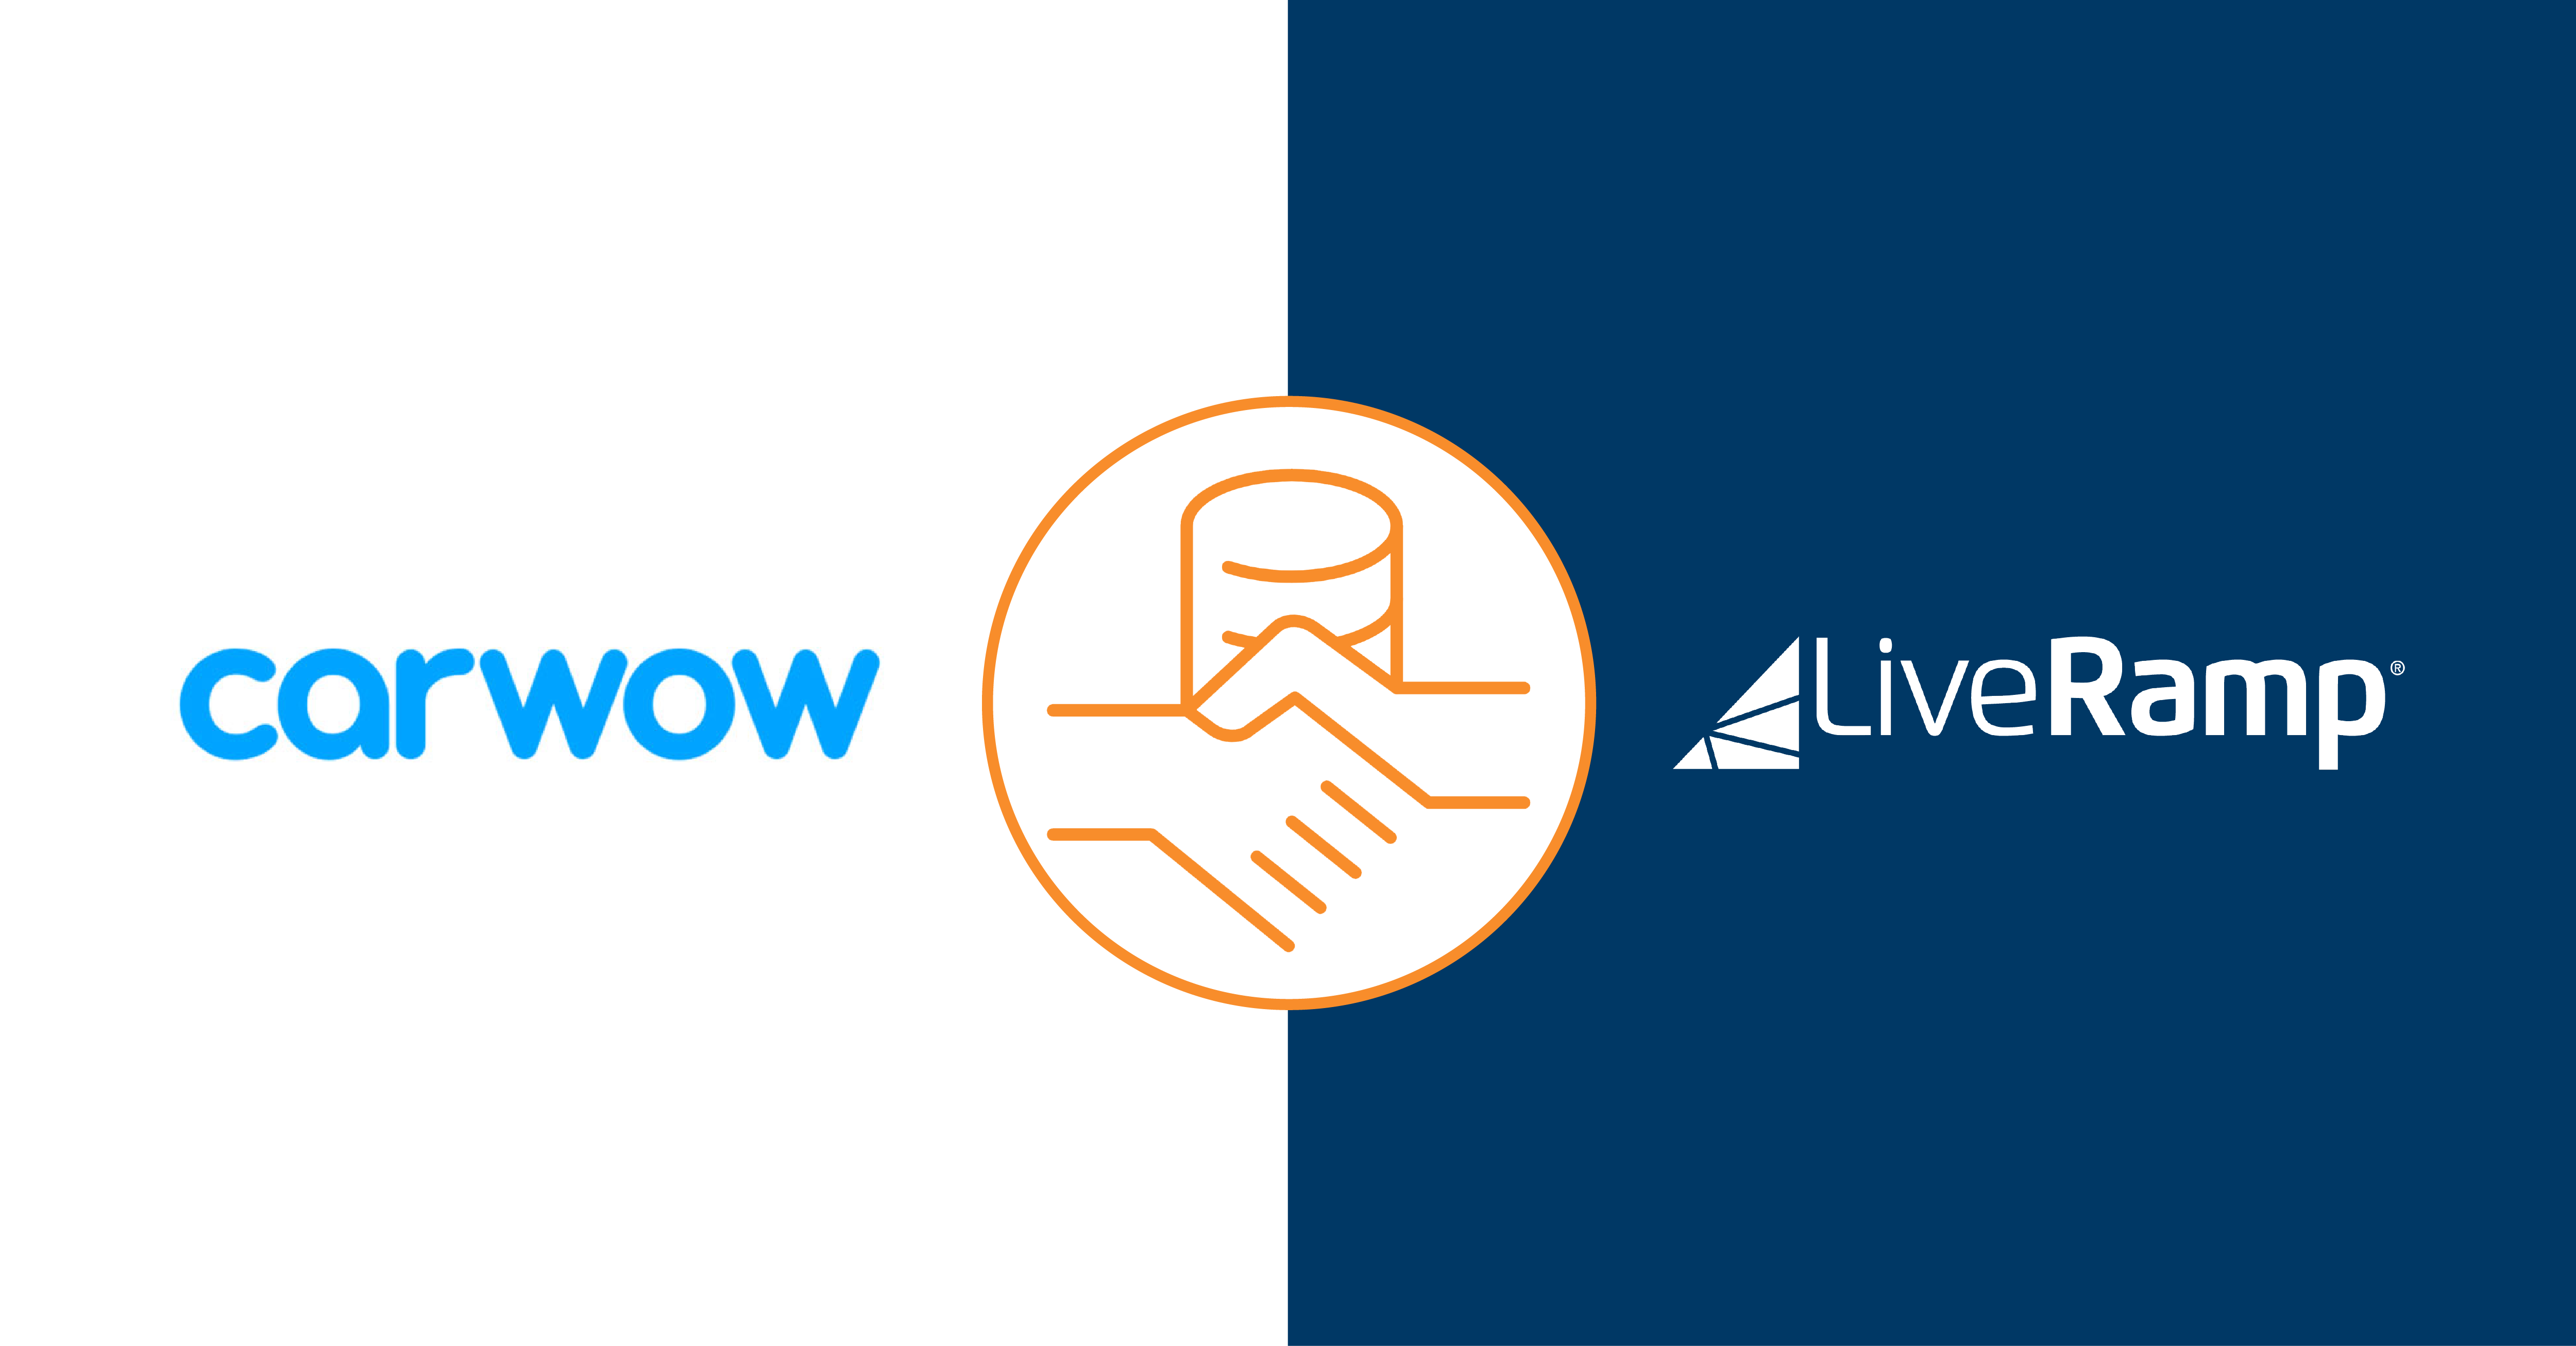 carwow liveramp data partnership